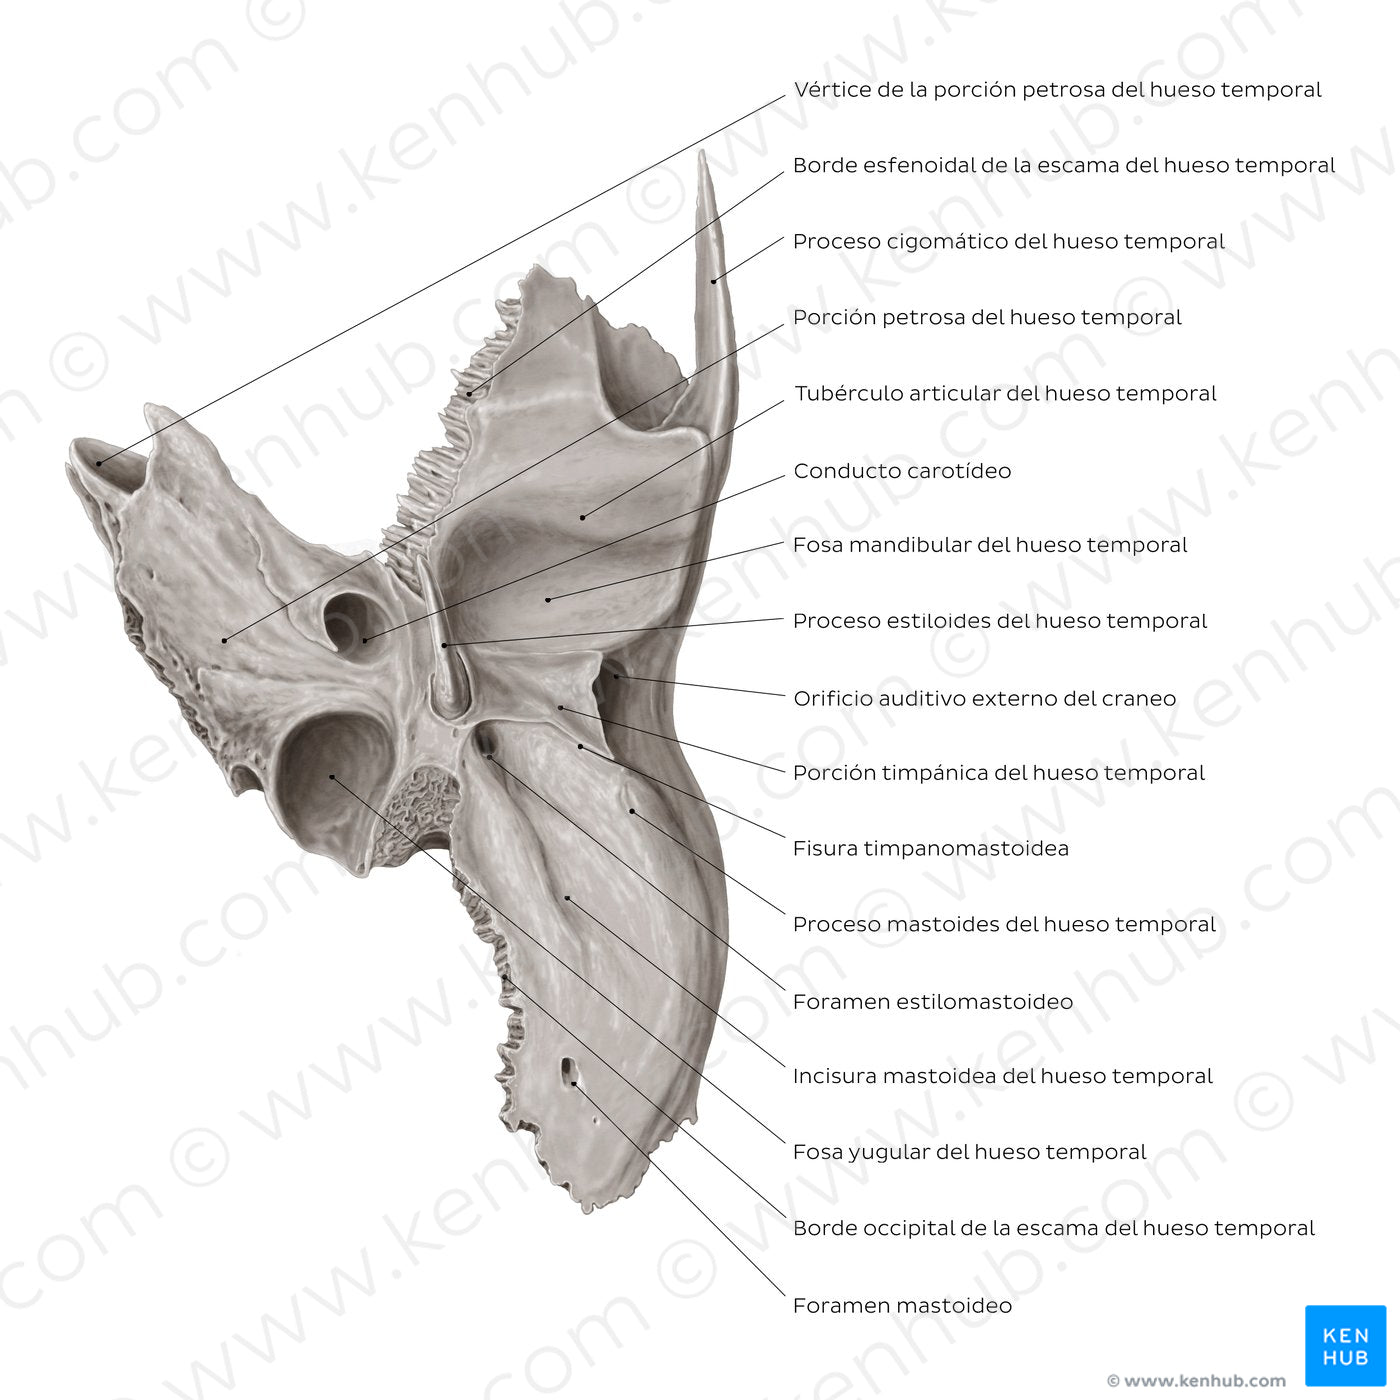 Temporal bone (inferior view) (Spanish)